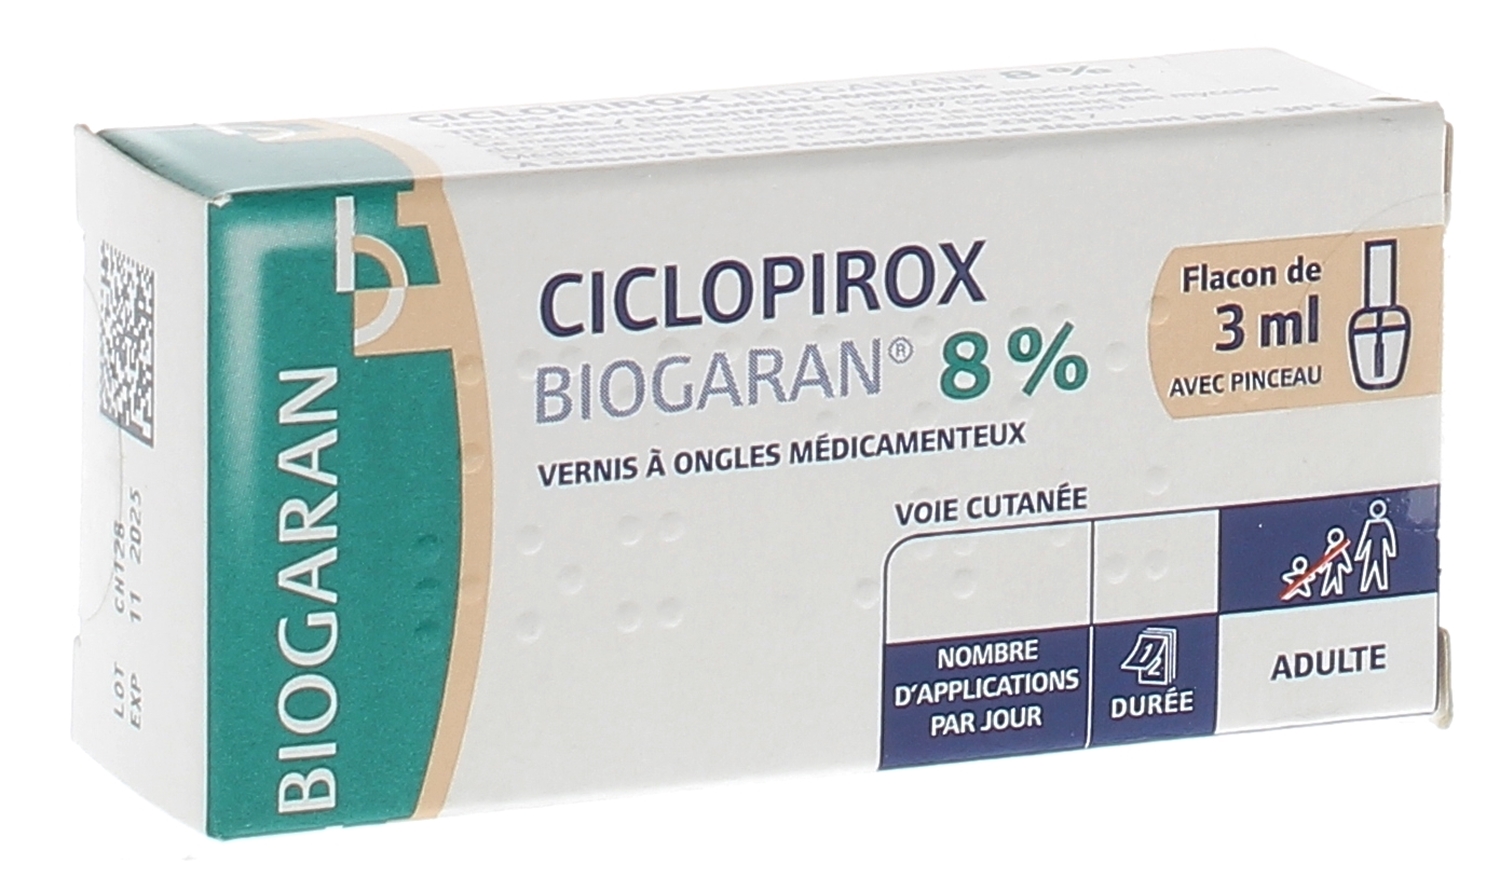 Ciclopirox 8% vernis à ongles Biogaran - flacon de 3ml avec pinceau